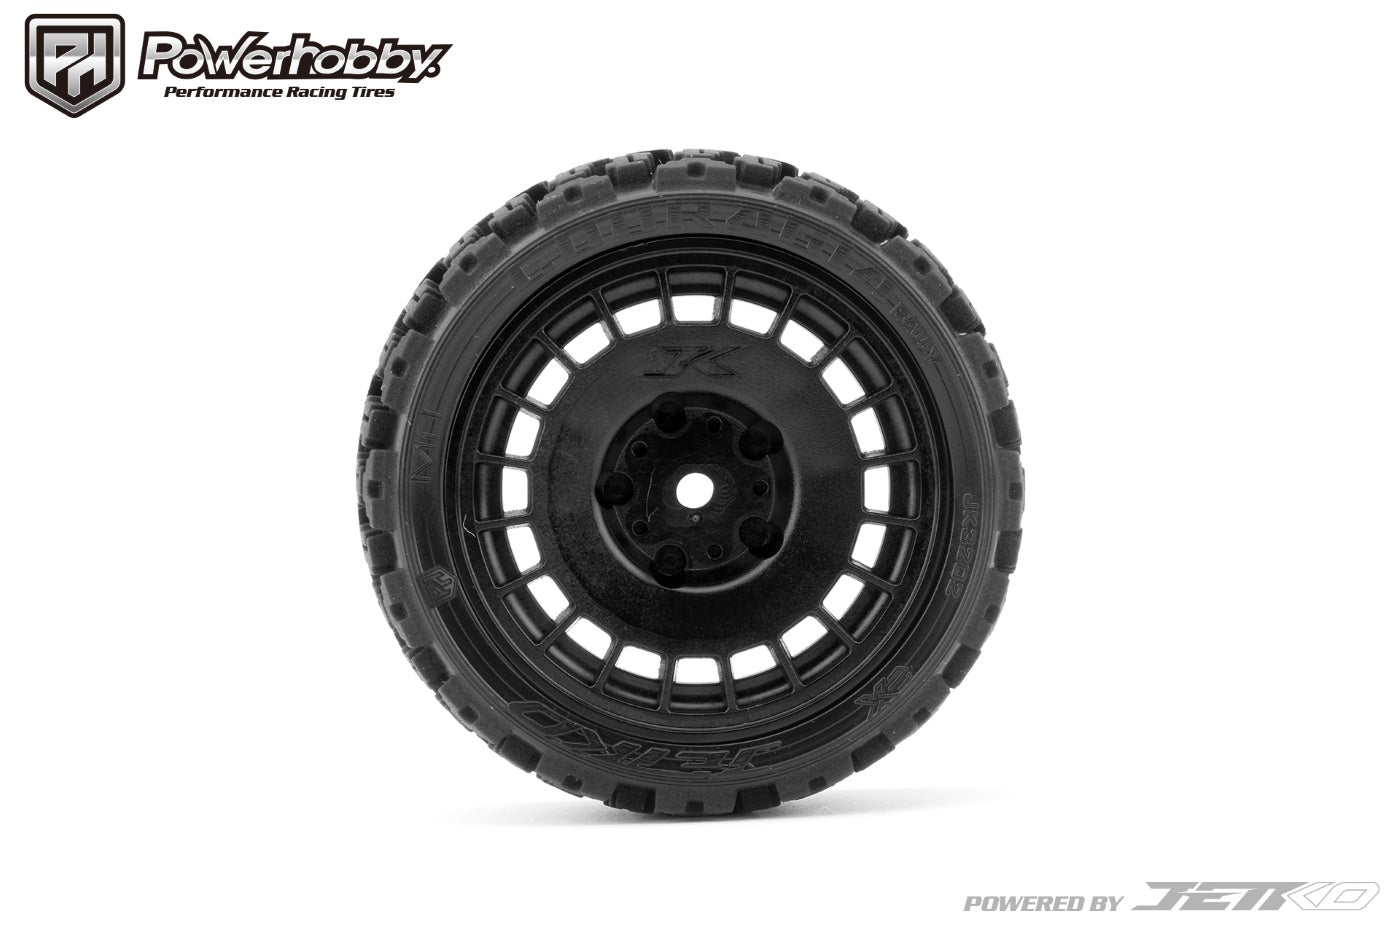 Powerhobby 1/10 Rally Car Couragia Mounted Tires Radial Wheels (4) - PowerHobby